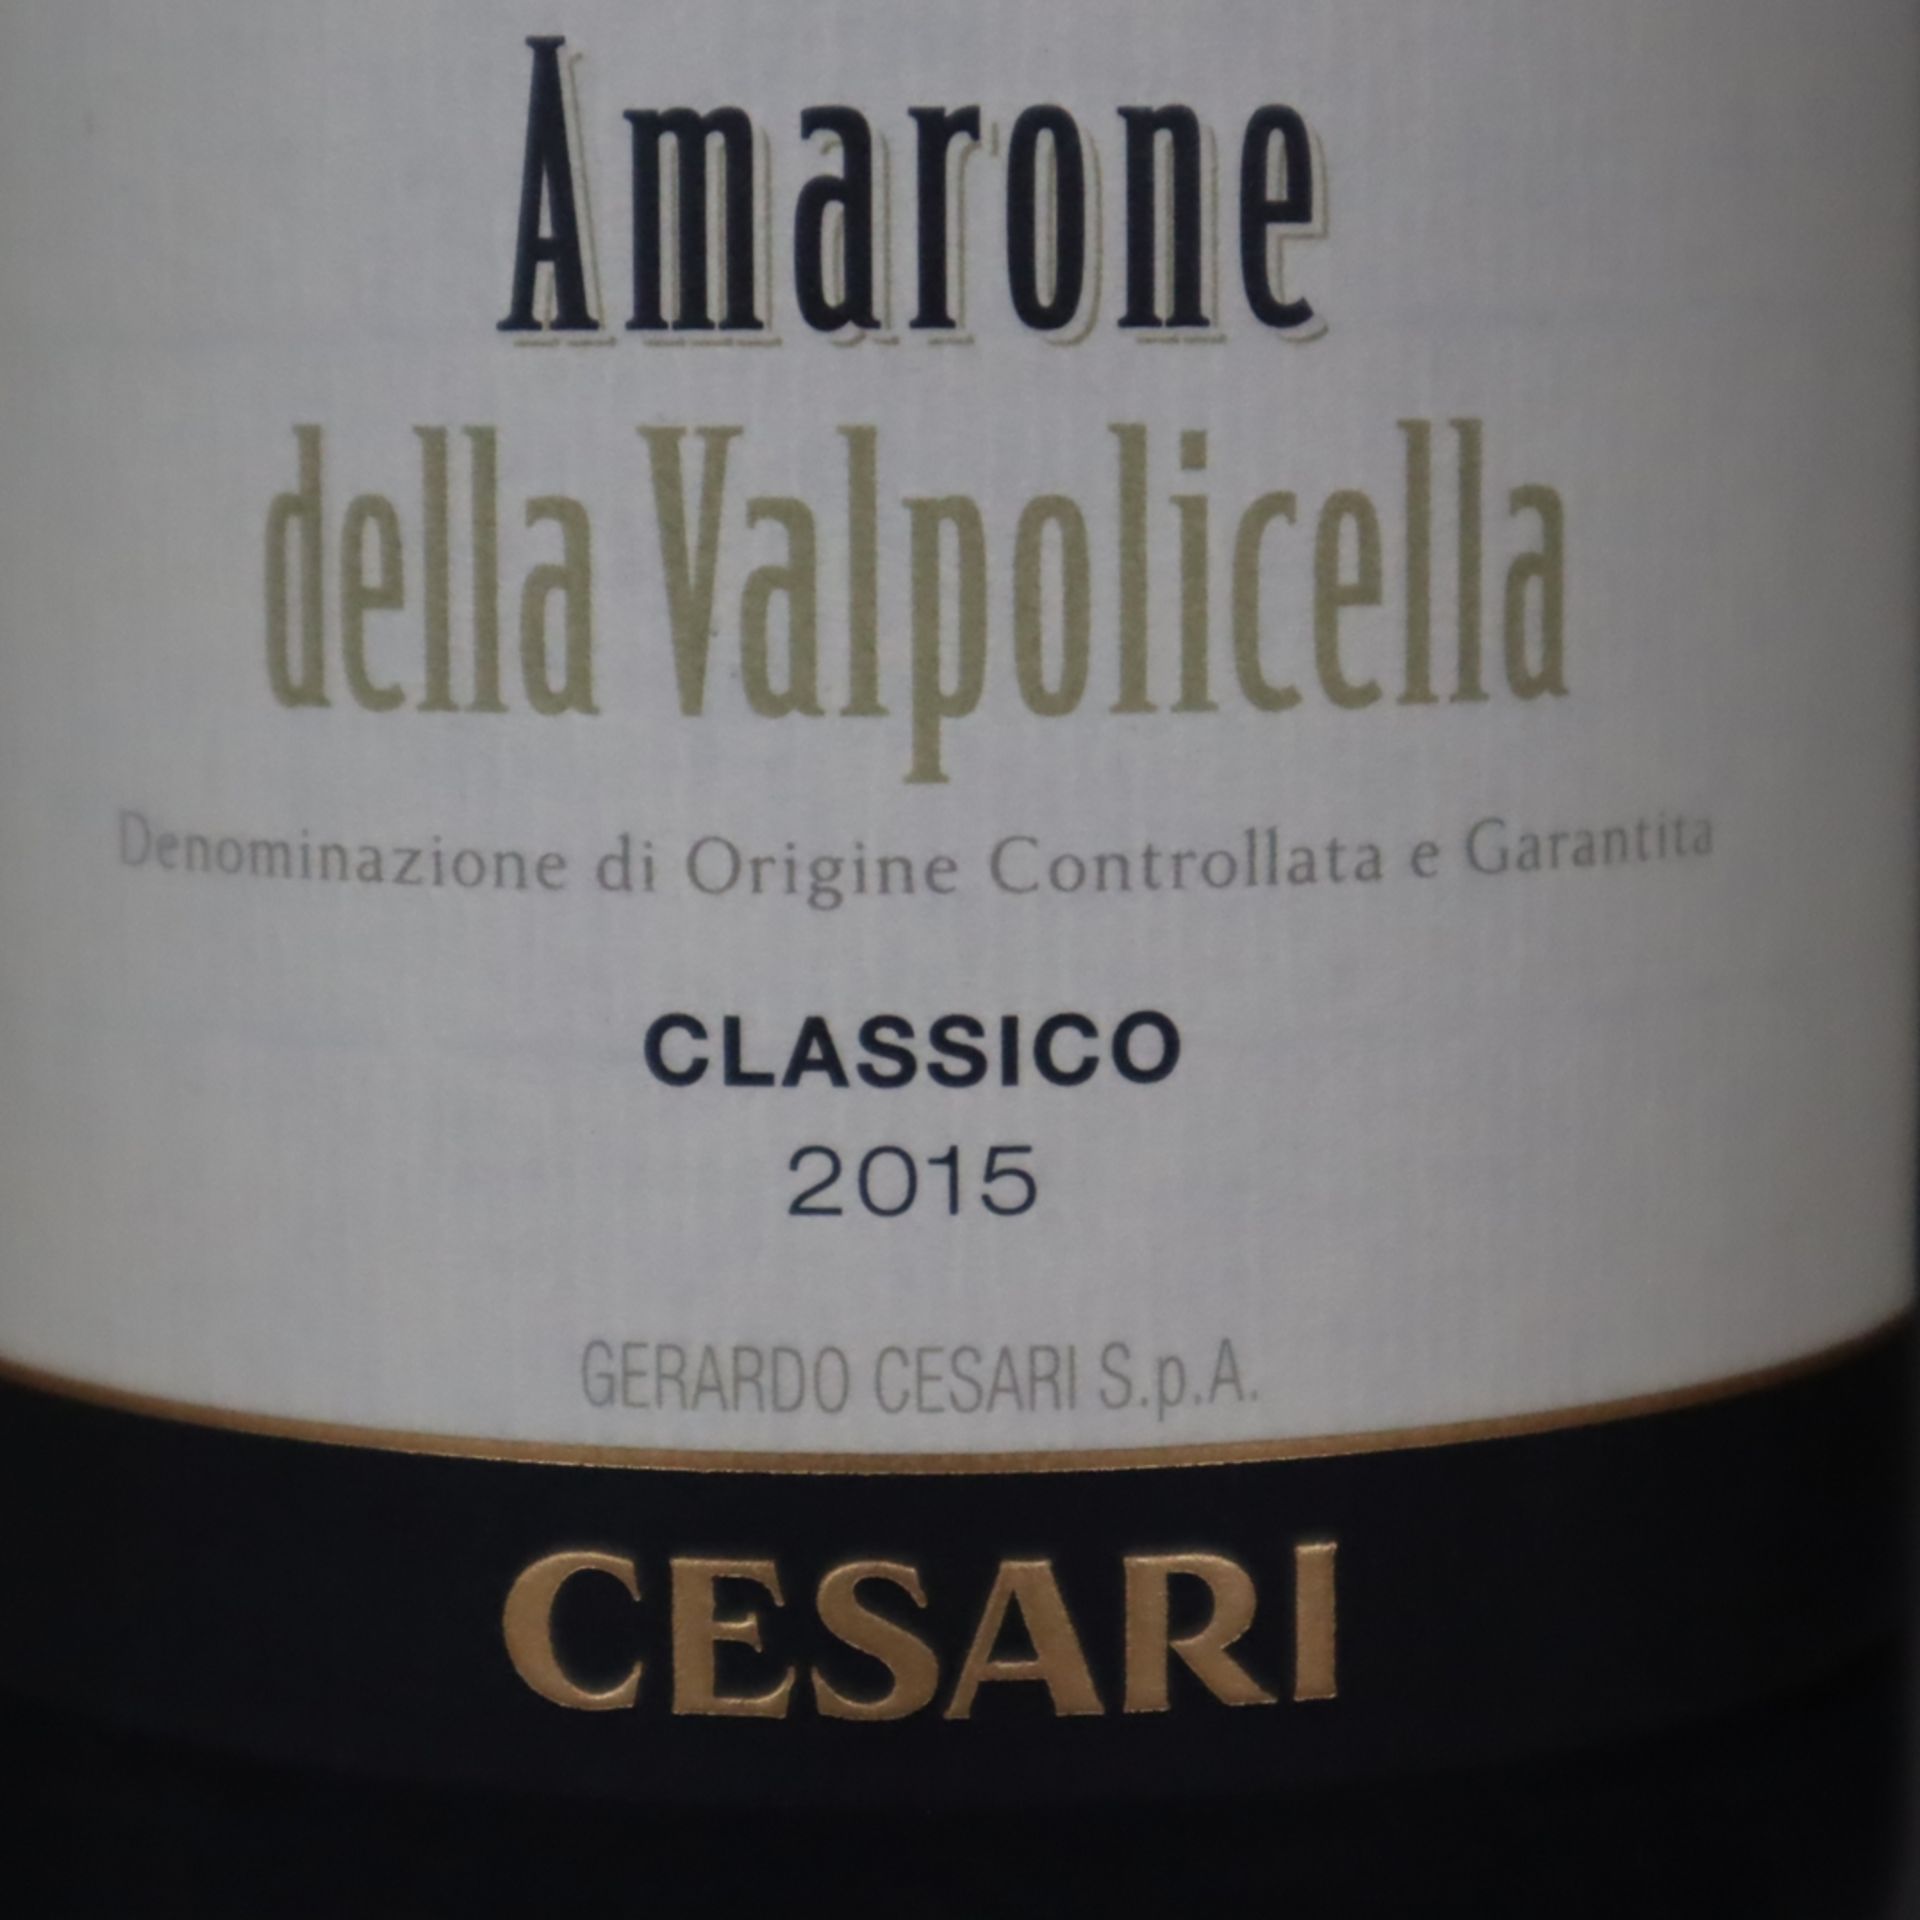 Weinkonvolut - 2 Flaschen, Cesari Amarone della Valpolicella, Classico, Jahrgang 2015, 0,7 Liter - Image 4 of 5